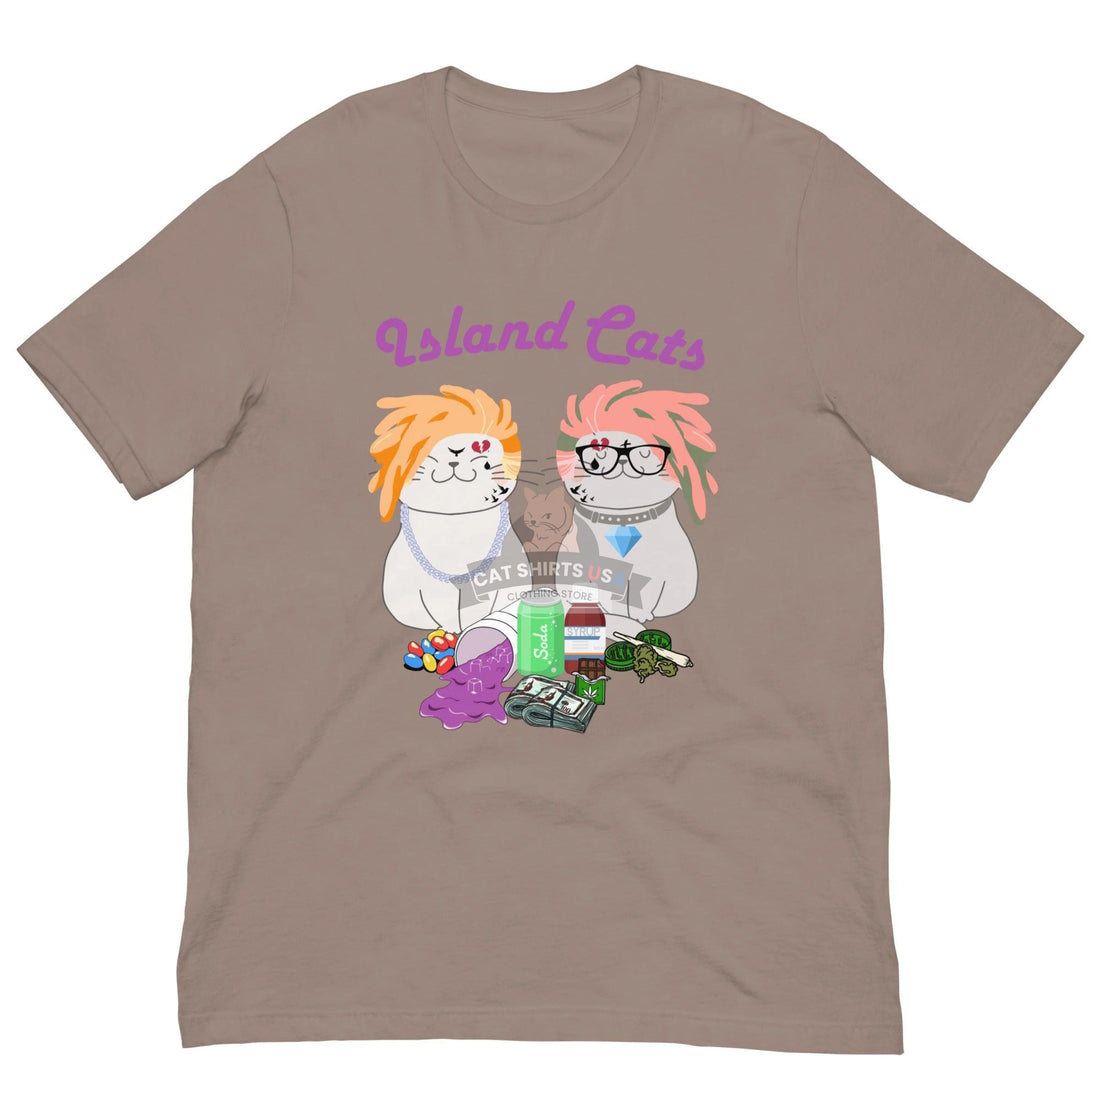 Island Cats Cat Shirt - Cat Shirts USA